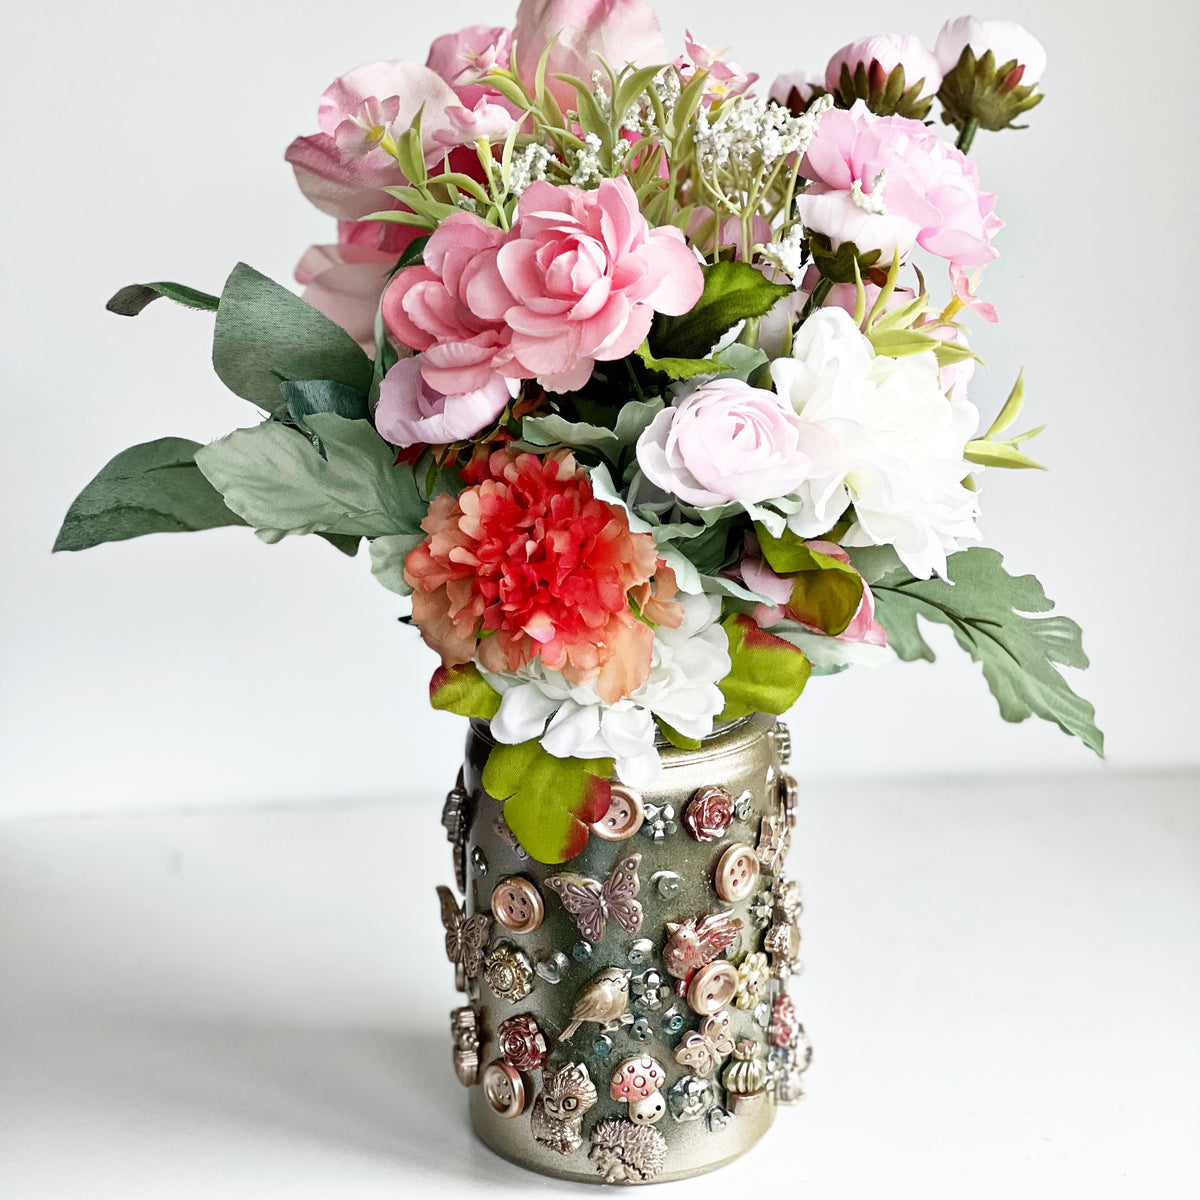 UV RESIN Flower Vase Crafting